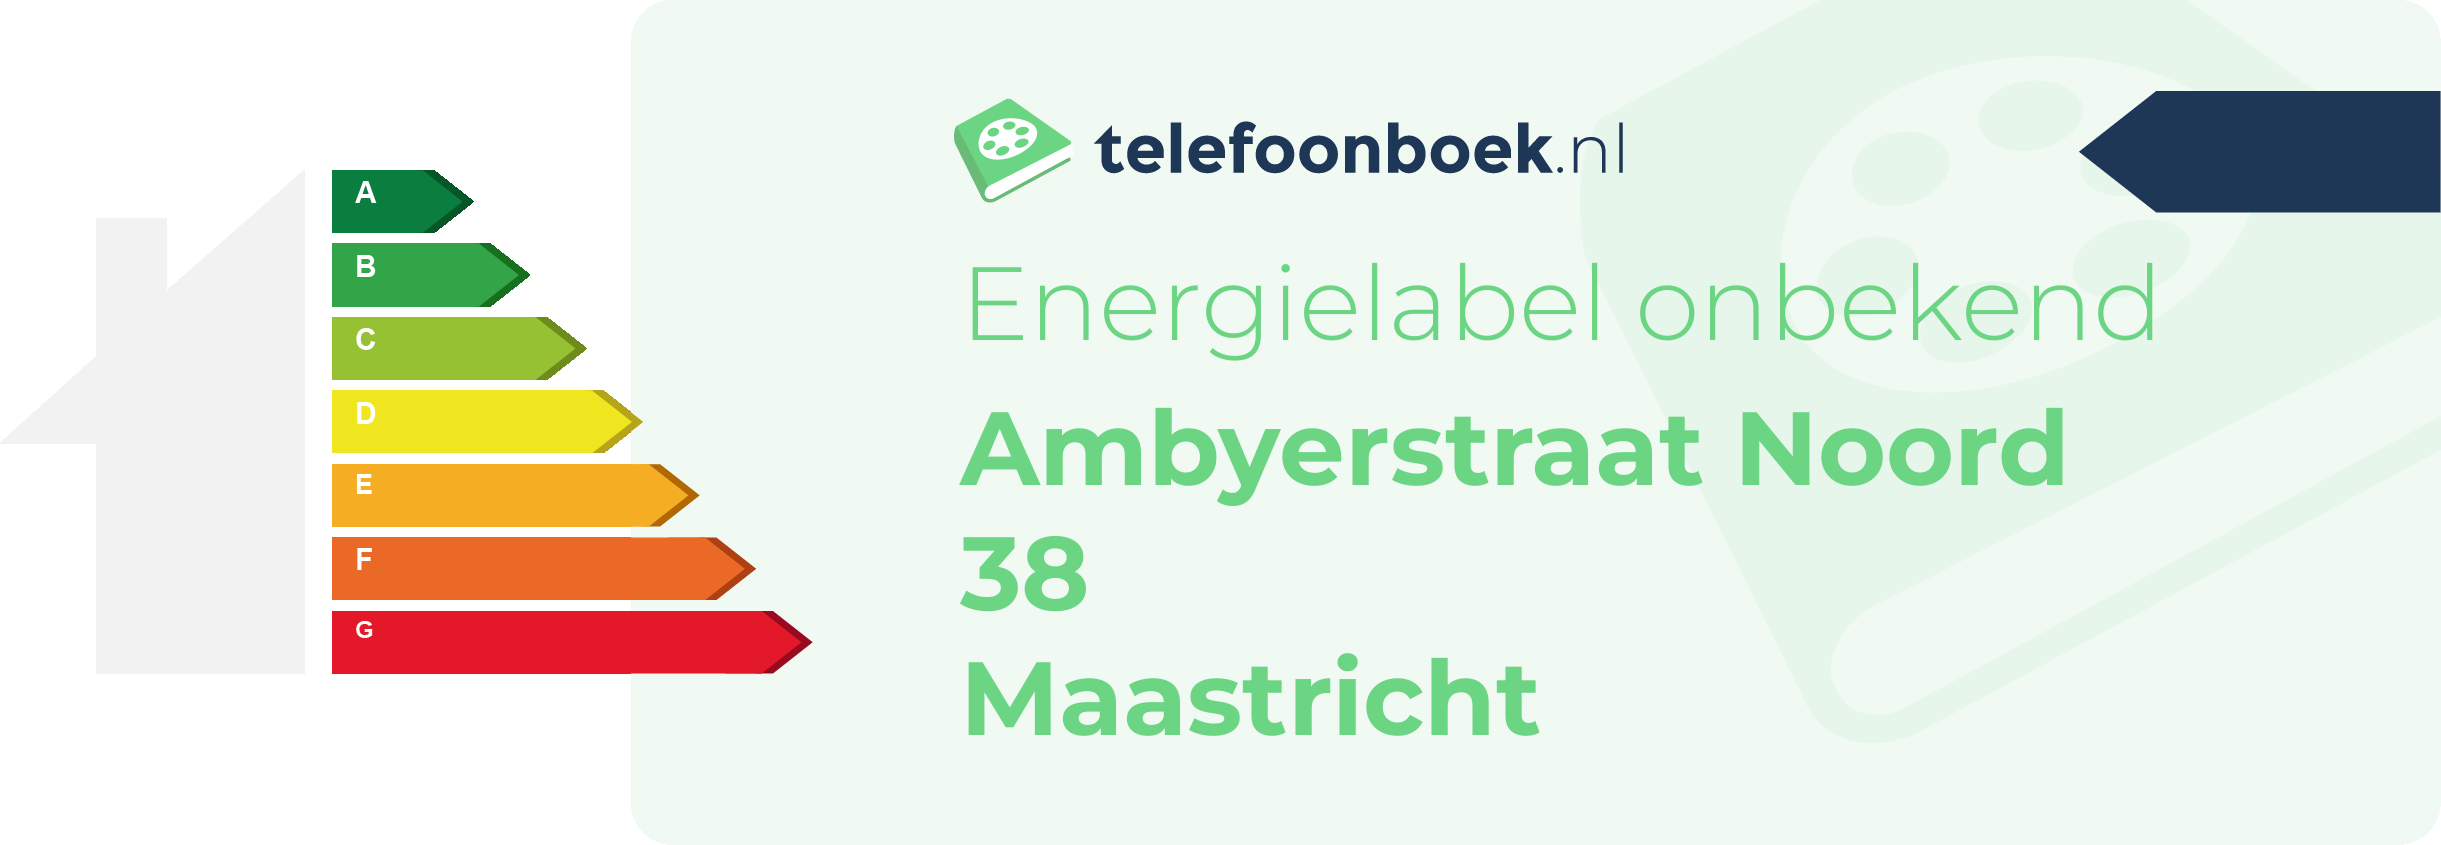 Energielabel Ambyerstraat Noord 38 Maastricht